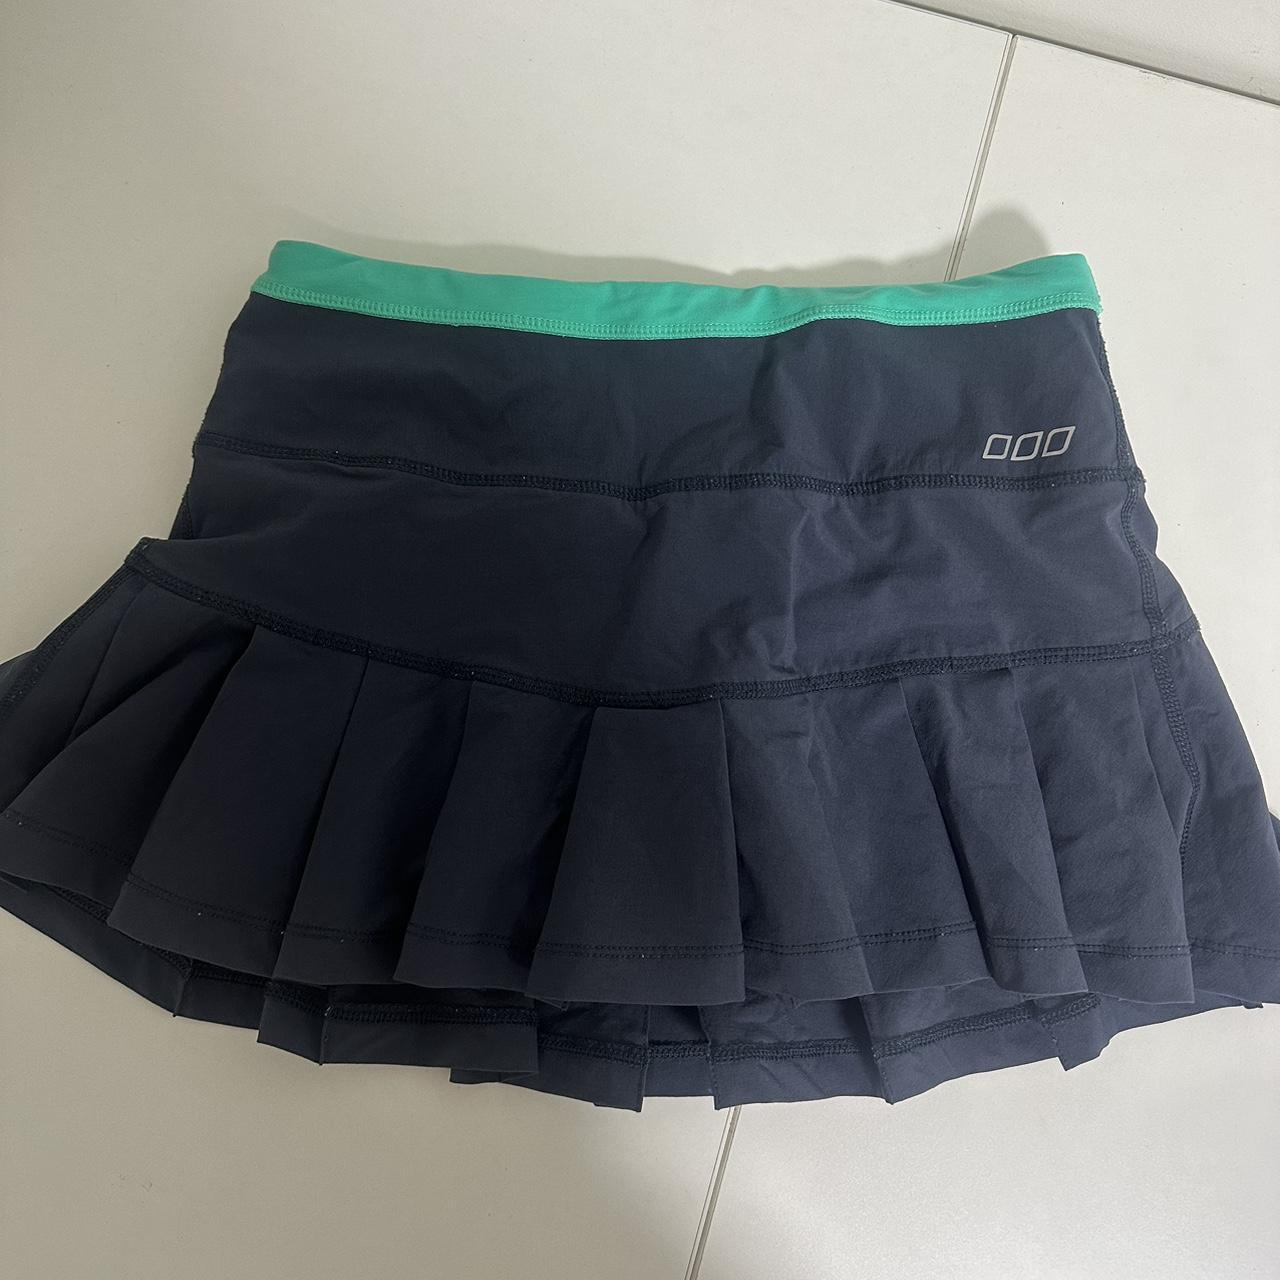 Lorna Jane old style tennis skirt Worn a handful of... - Depop